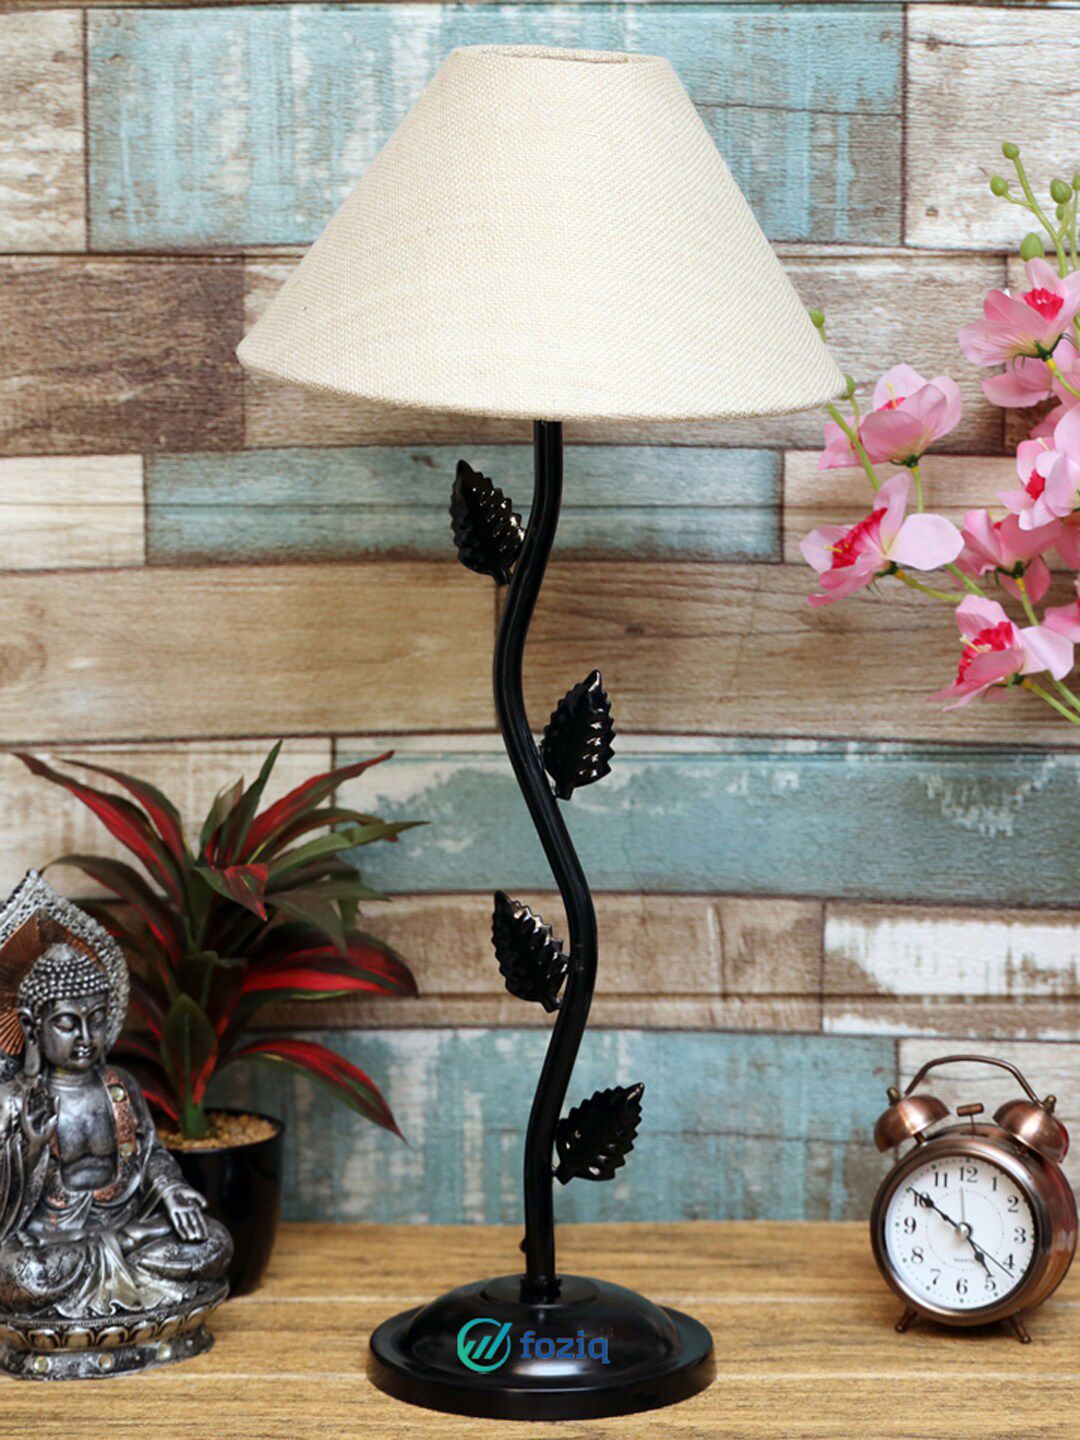 foziq Black & Off-White Textured Table Lamp Price in India